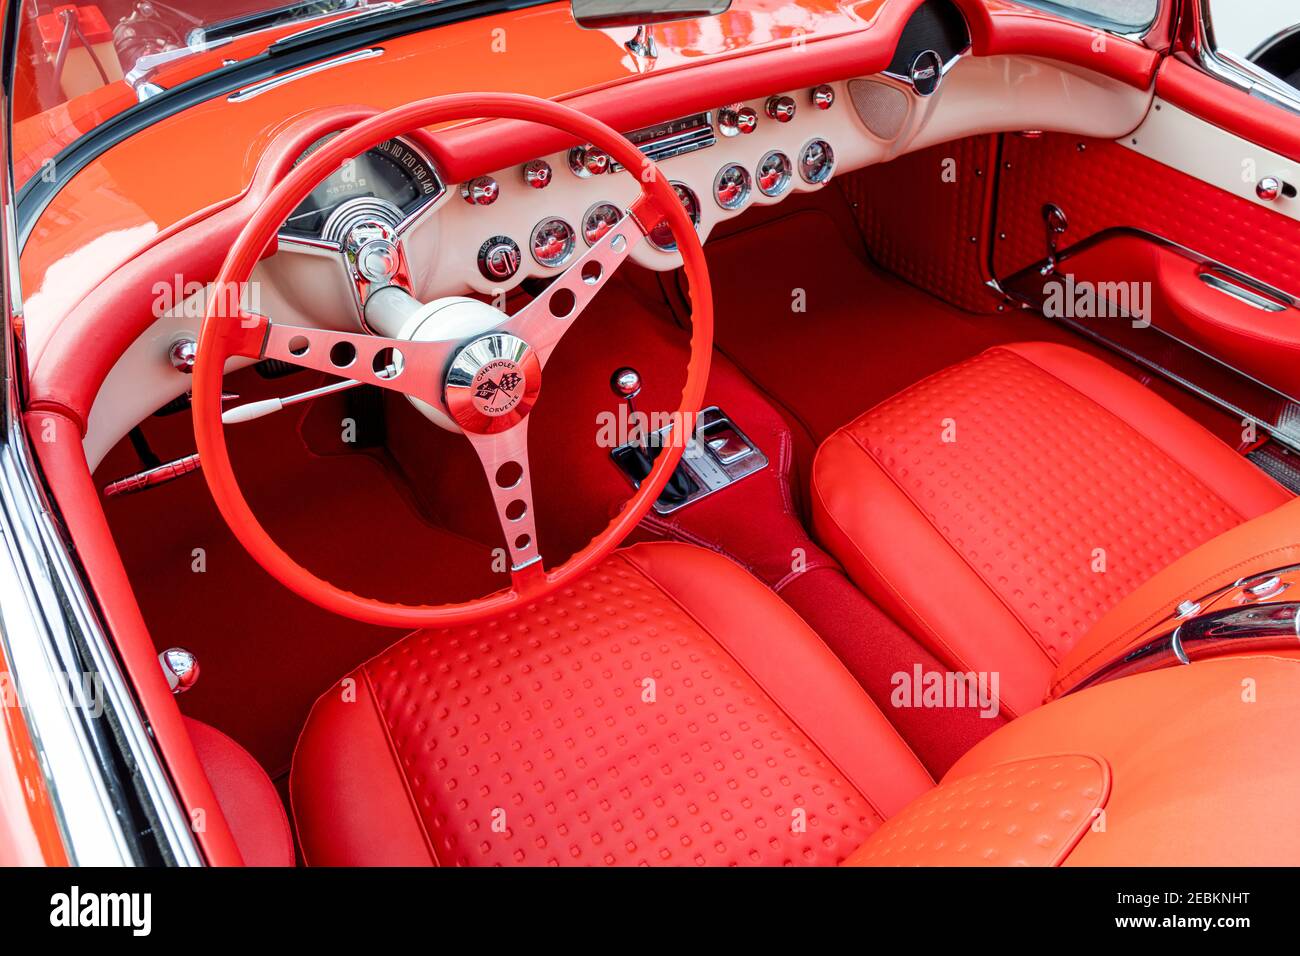 1957 orange Chevrolet Corvette interior on display at 'Cars on Fifth' - Naples, Florida, USA Stock Photo